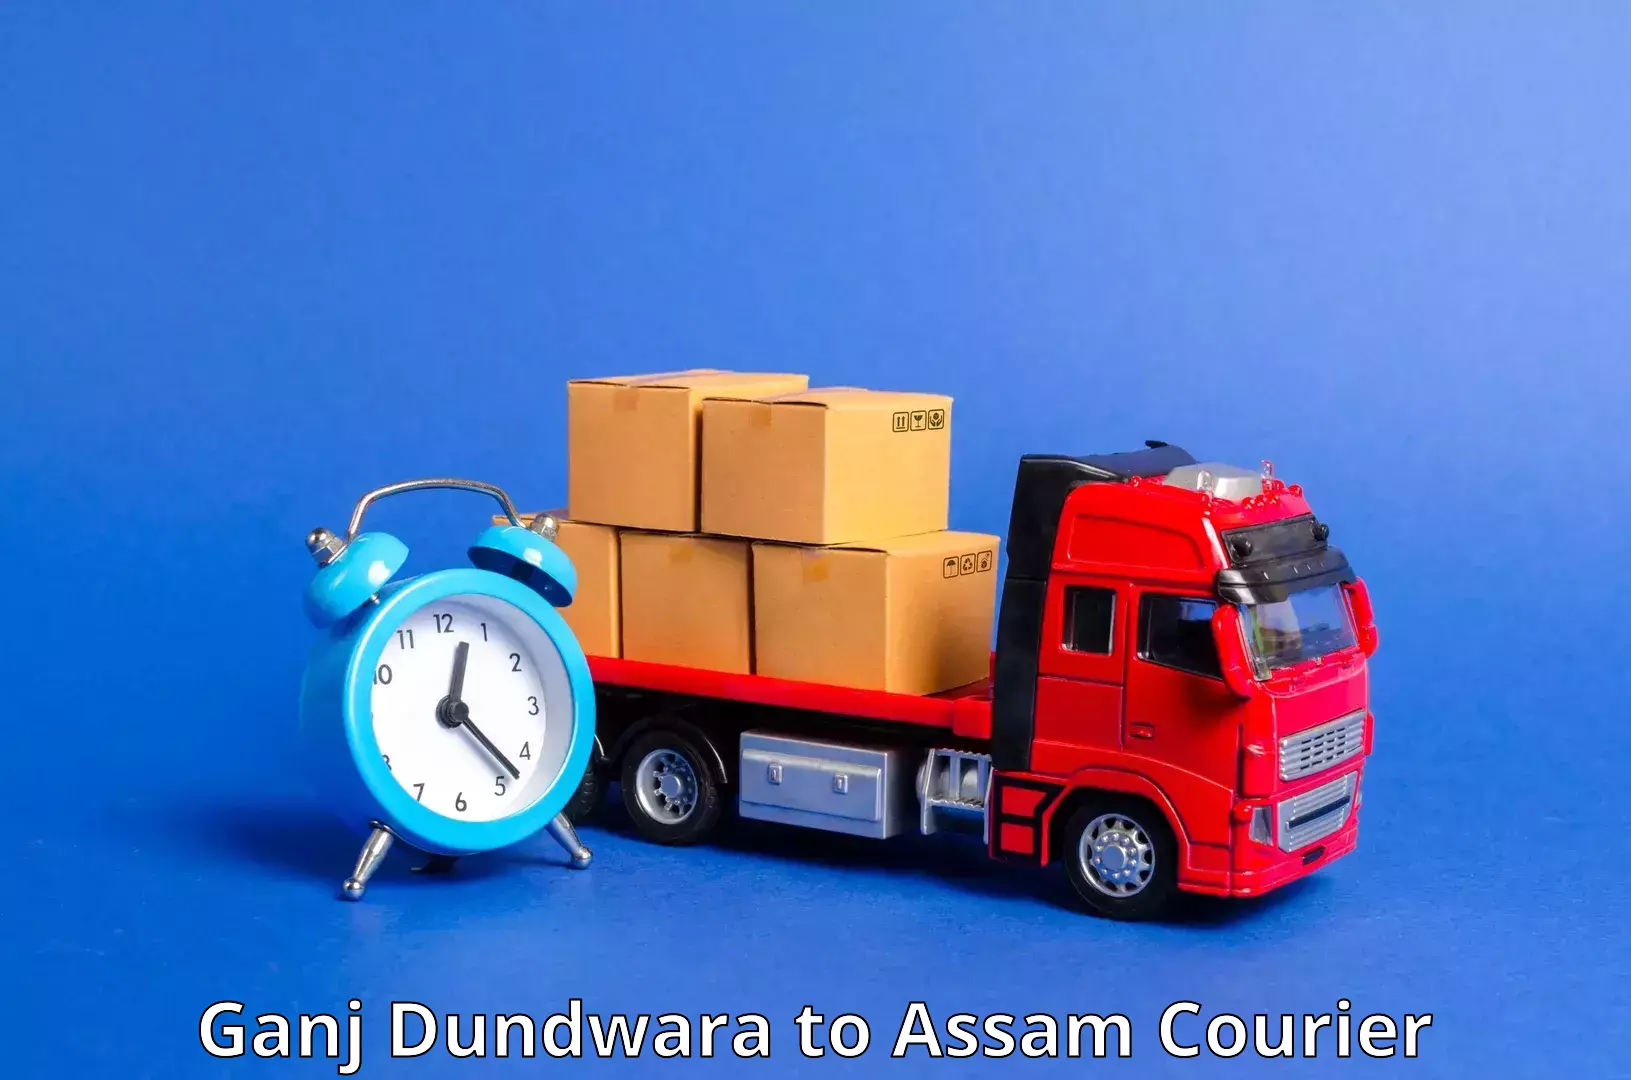 Flexible delivery scheduling Ganj Dundwara to Lala Assam